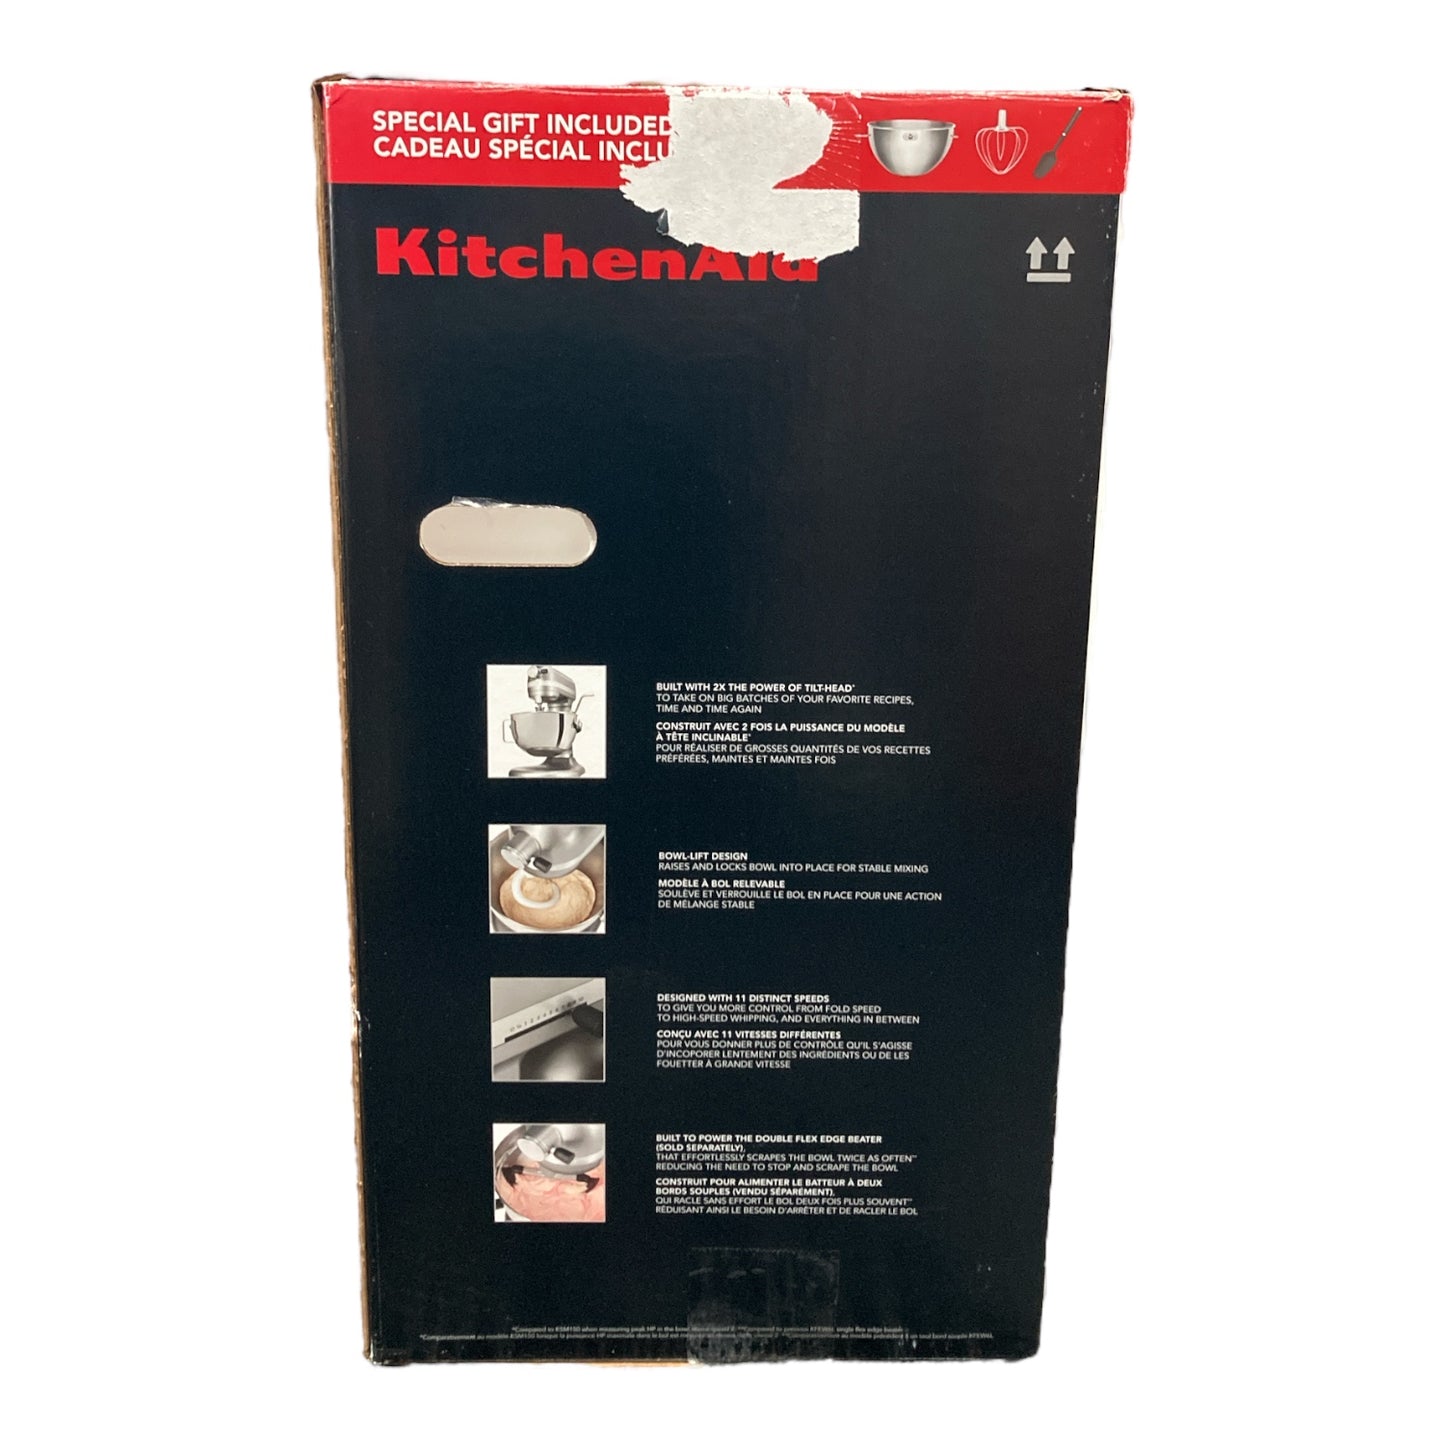 KitchenAid 5.5 Quart Bowl-Lift Stand Mixer (Contour Silver)